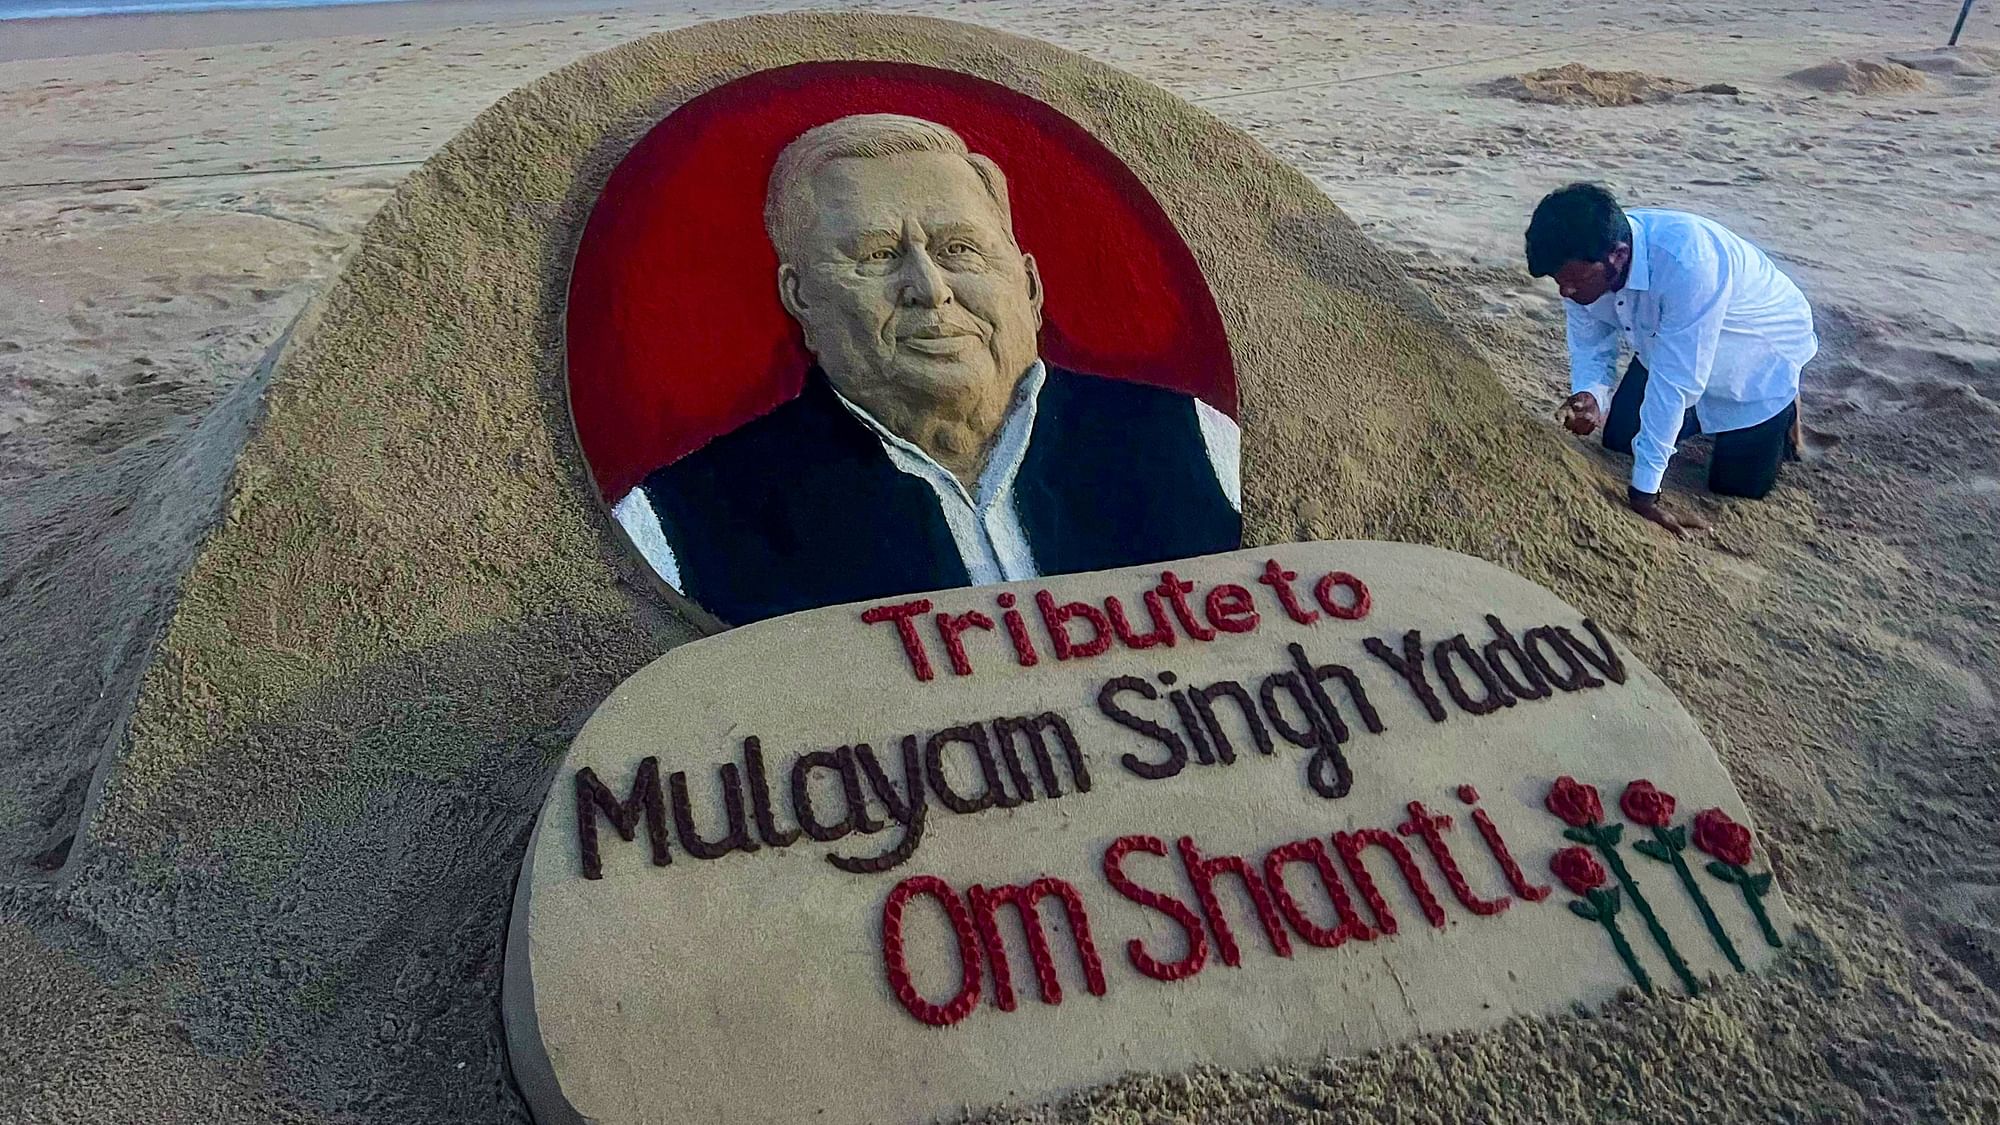 <div class="paragraphs"><p>Puri: Sand artist Sudarsan Pattnaik creates a sculpture to pay tribute to Samajwadi Party founder Mulayam Singh Yadav, in Puri.&nbsp;</p></div>